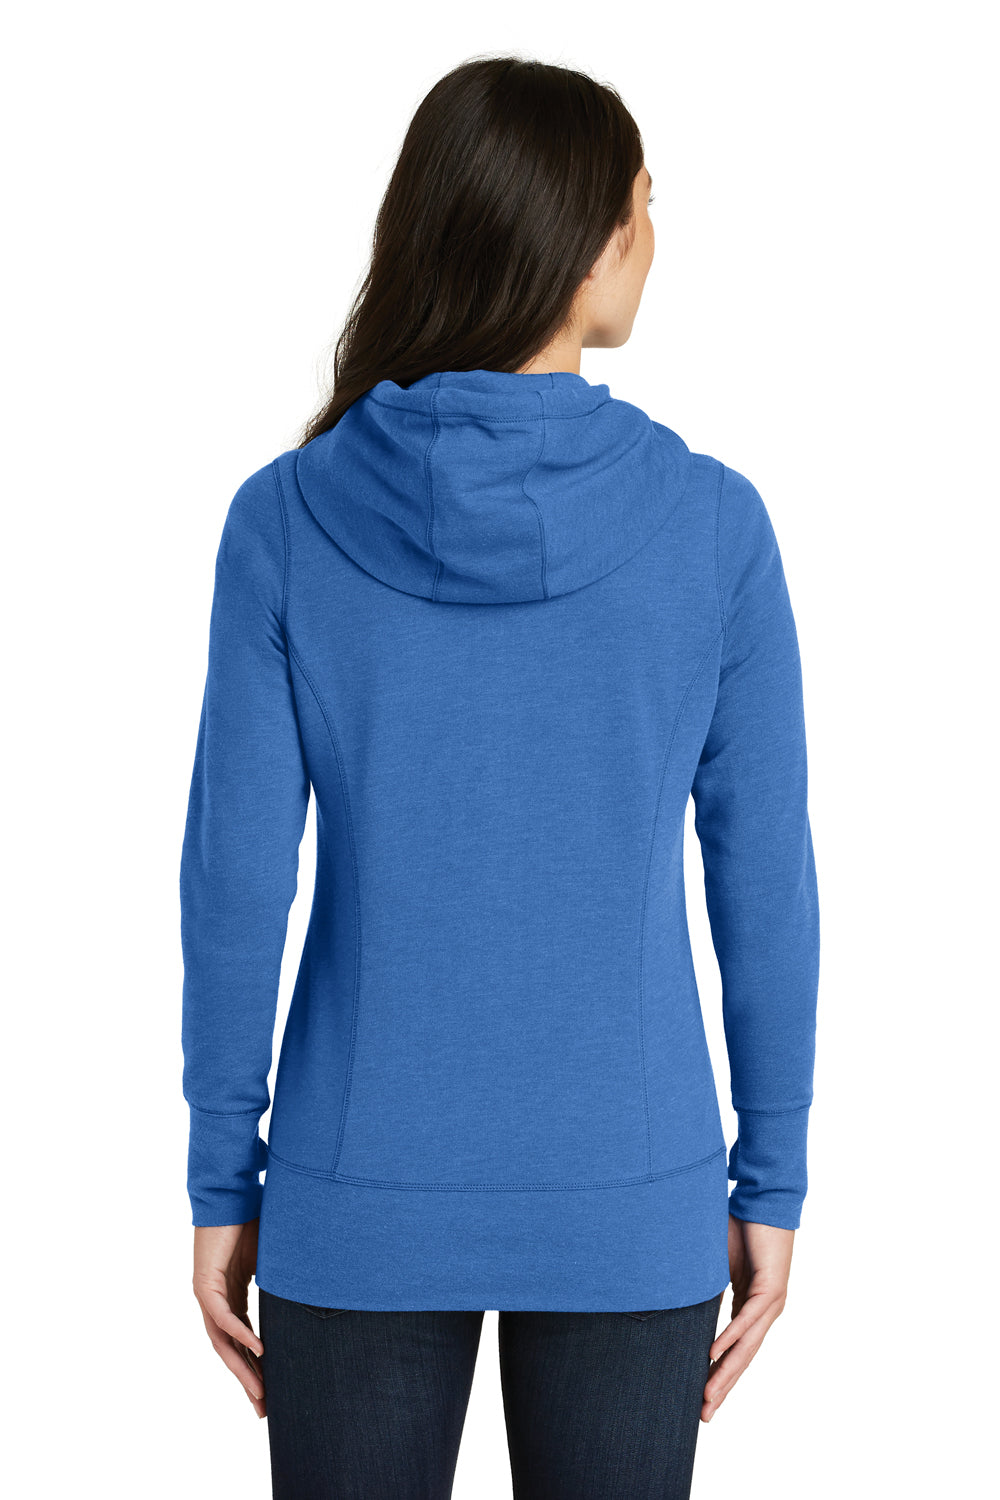 New Era LNEA511 Womens Fleece Full Zip Hooded Sweatshirt Hoodie Heather Royal Blue Back